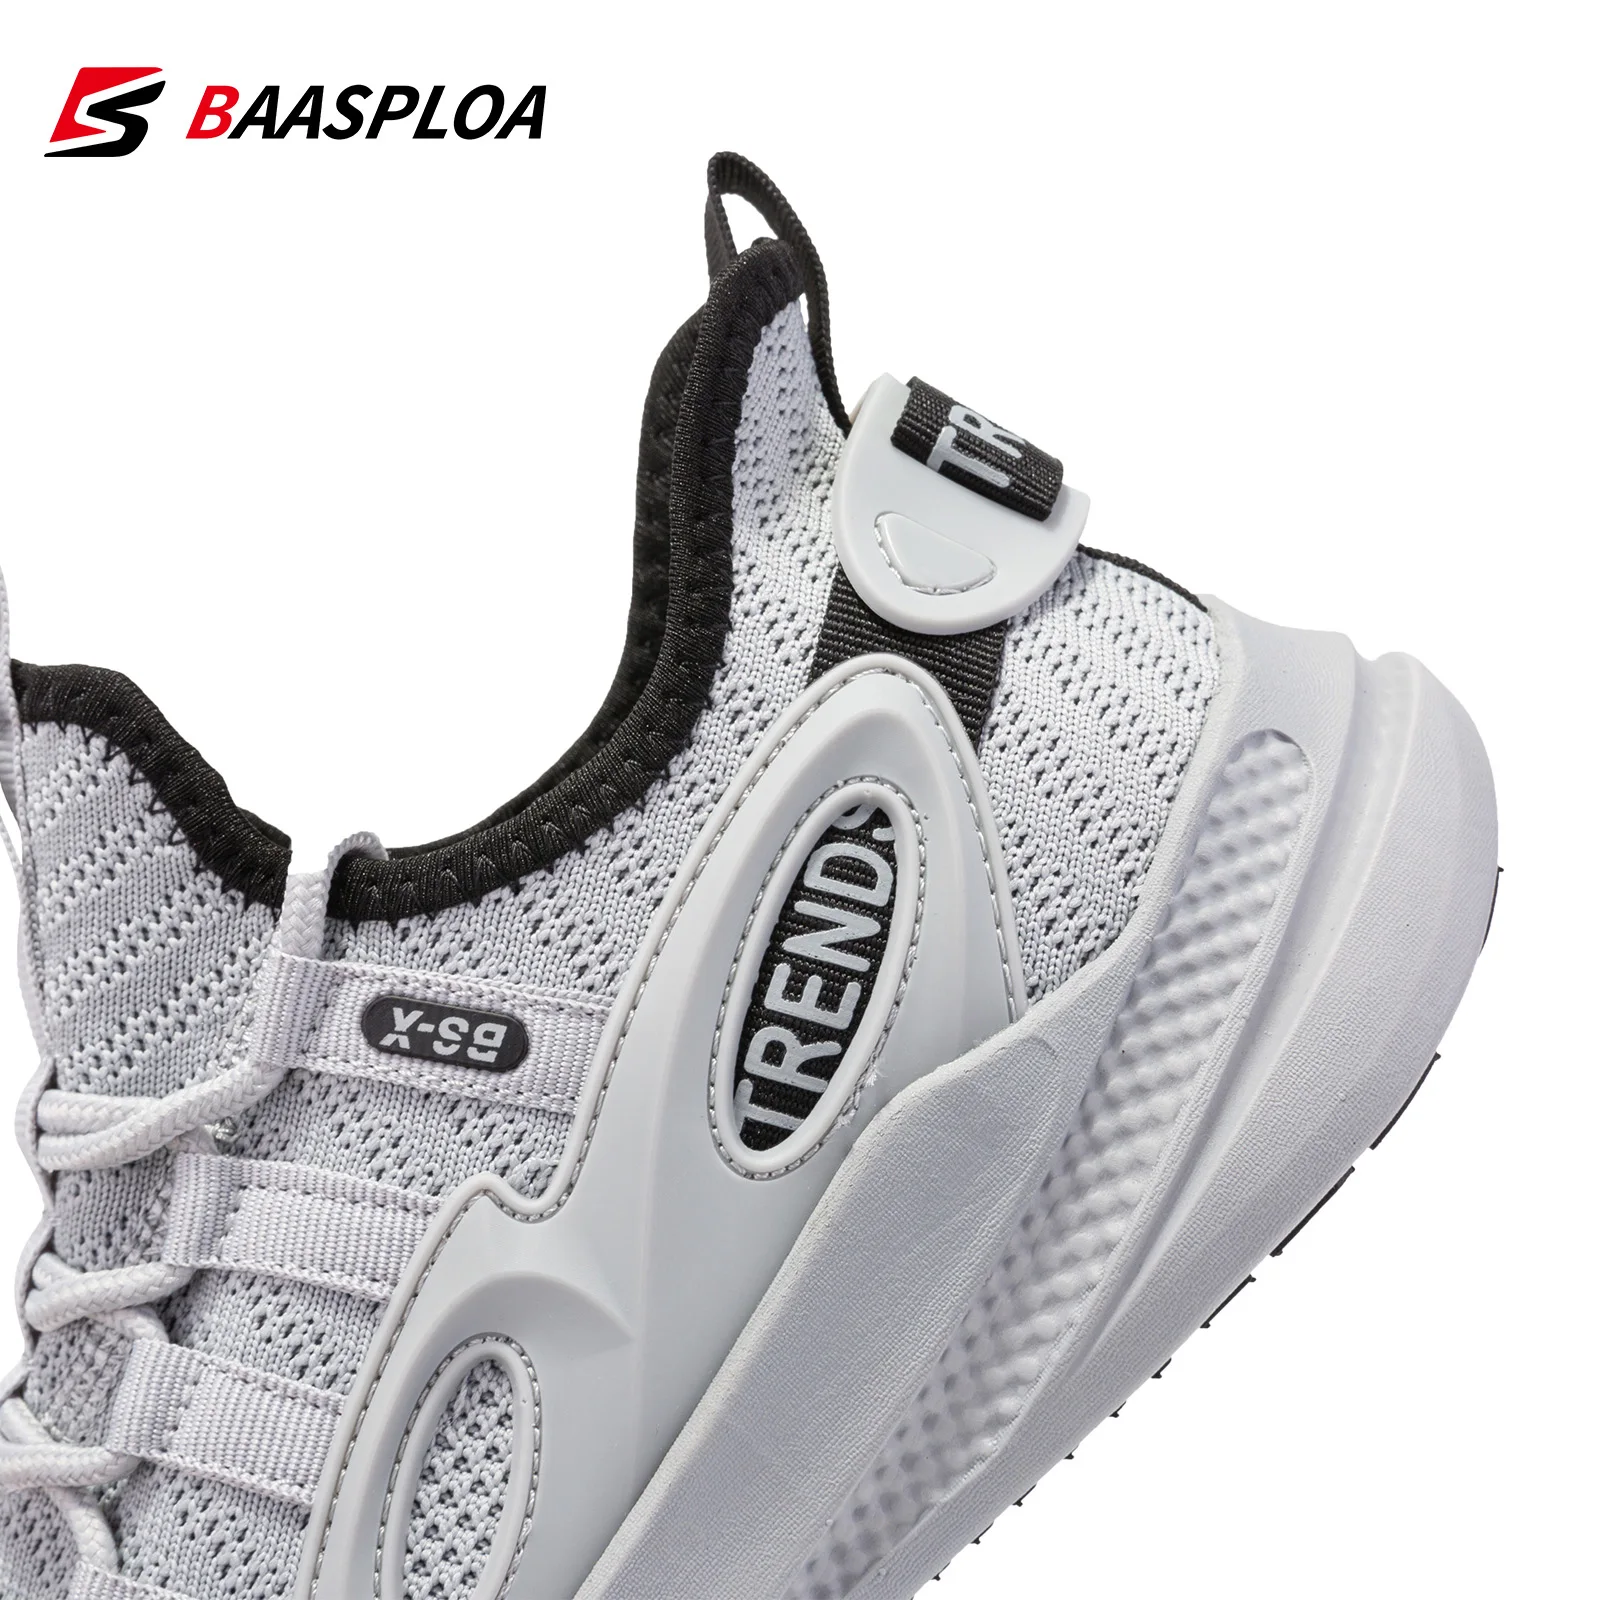 Baasploa ατόμων Μόδας Αναπνεύσιμα Παπούτσια Τρέχοντας Παπούτσια Ελαφρύ Άνετα Ελαφριά Απορρόφηση των κραδασμών Αρσενικό Παπούτσια του Τένις